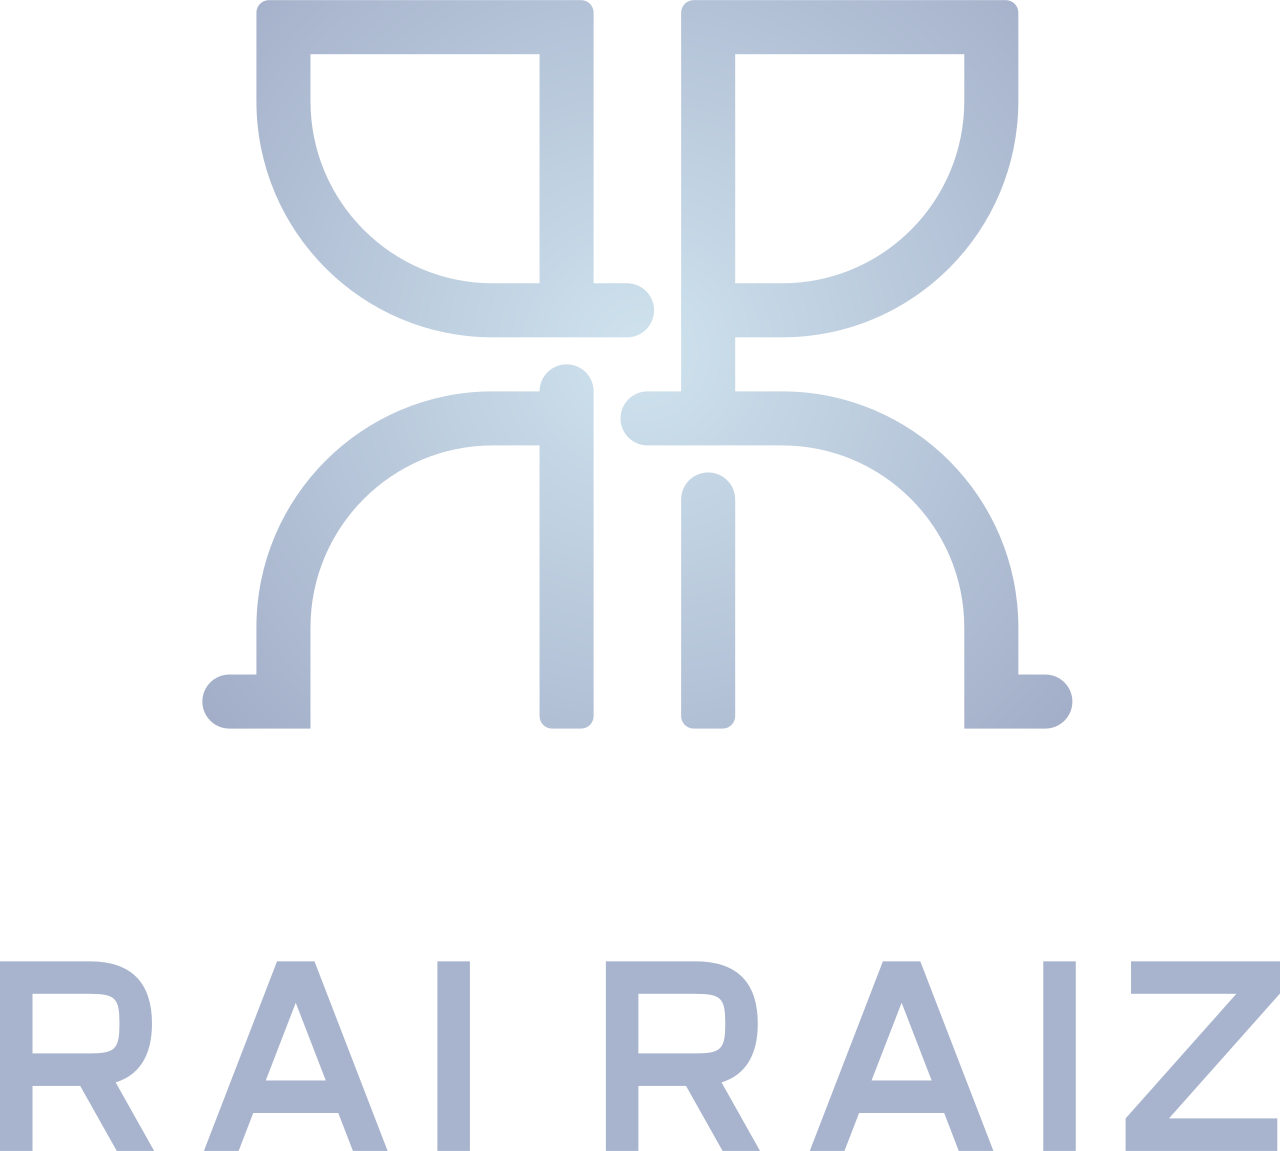 Rai Raiz's logo